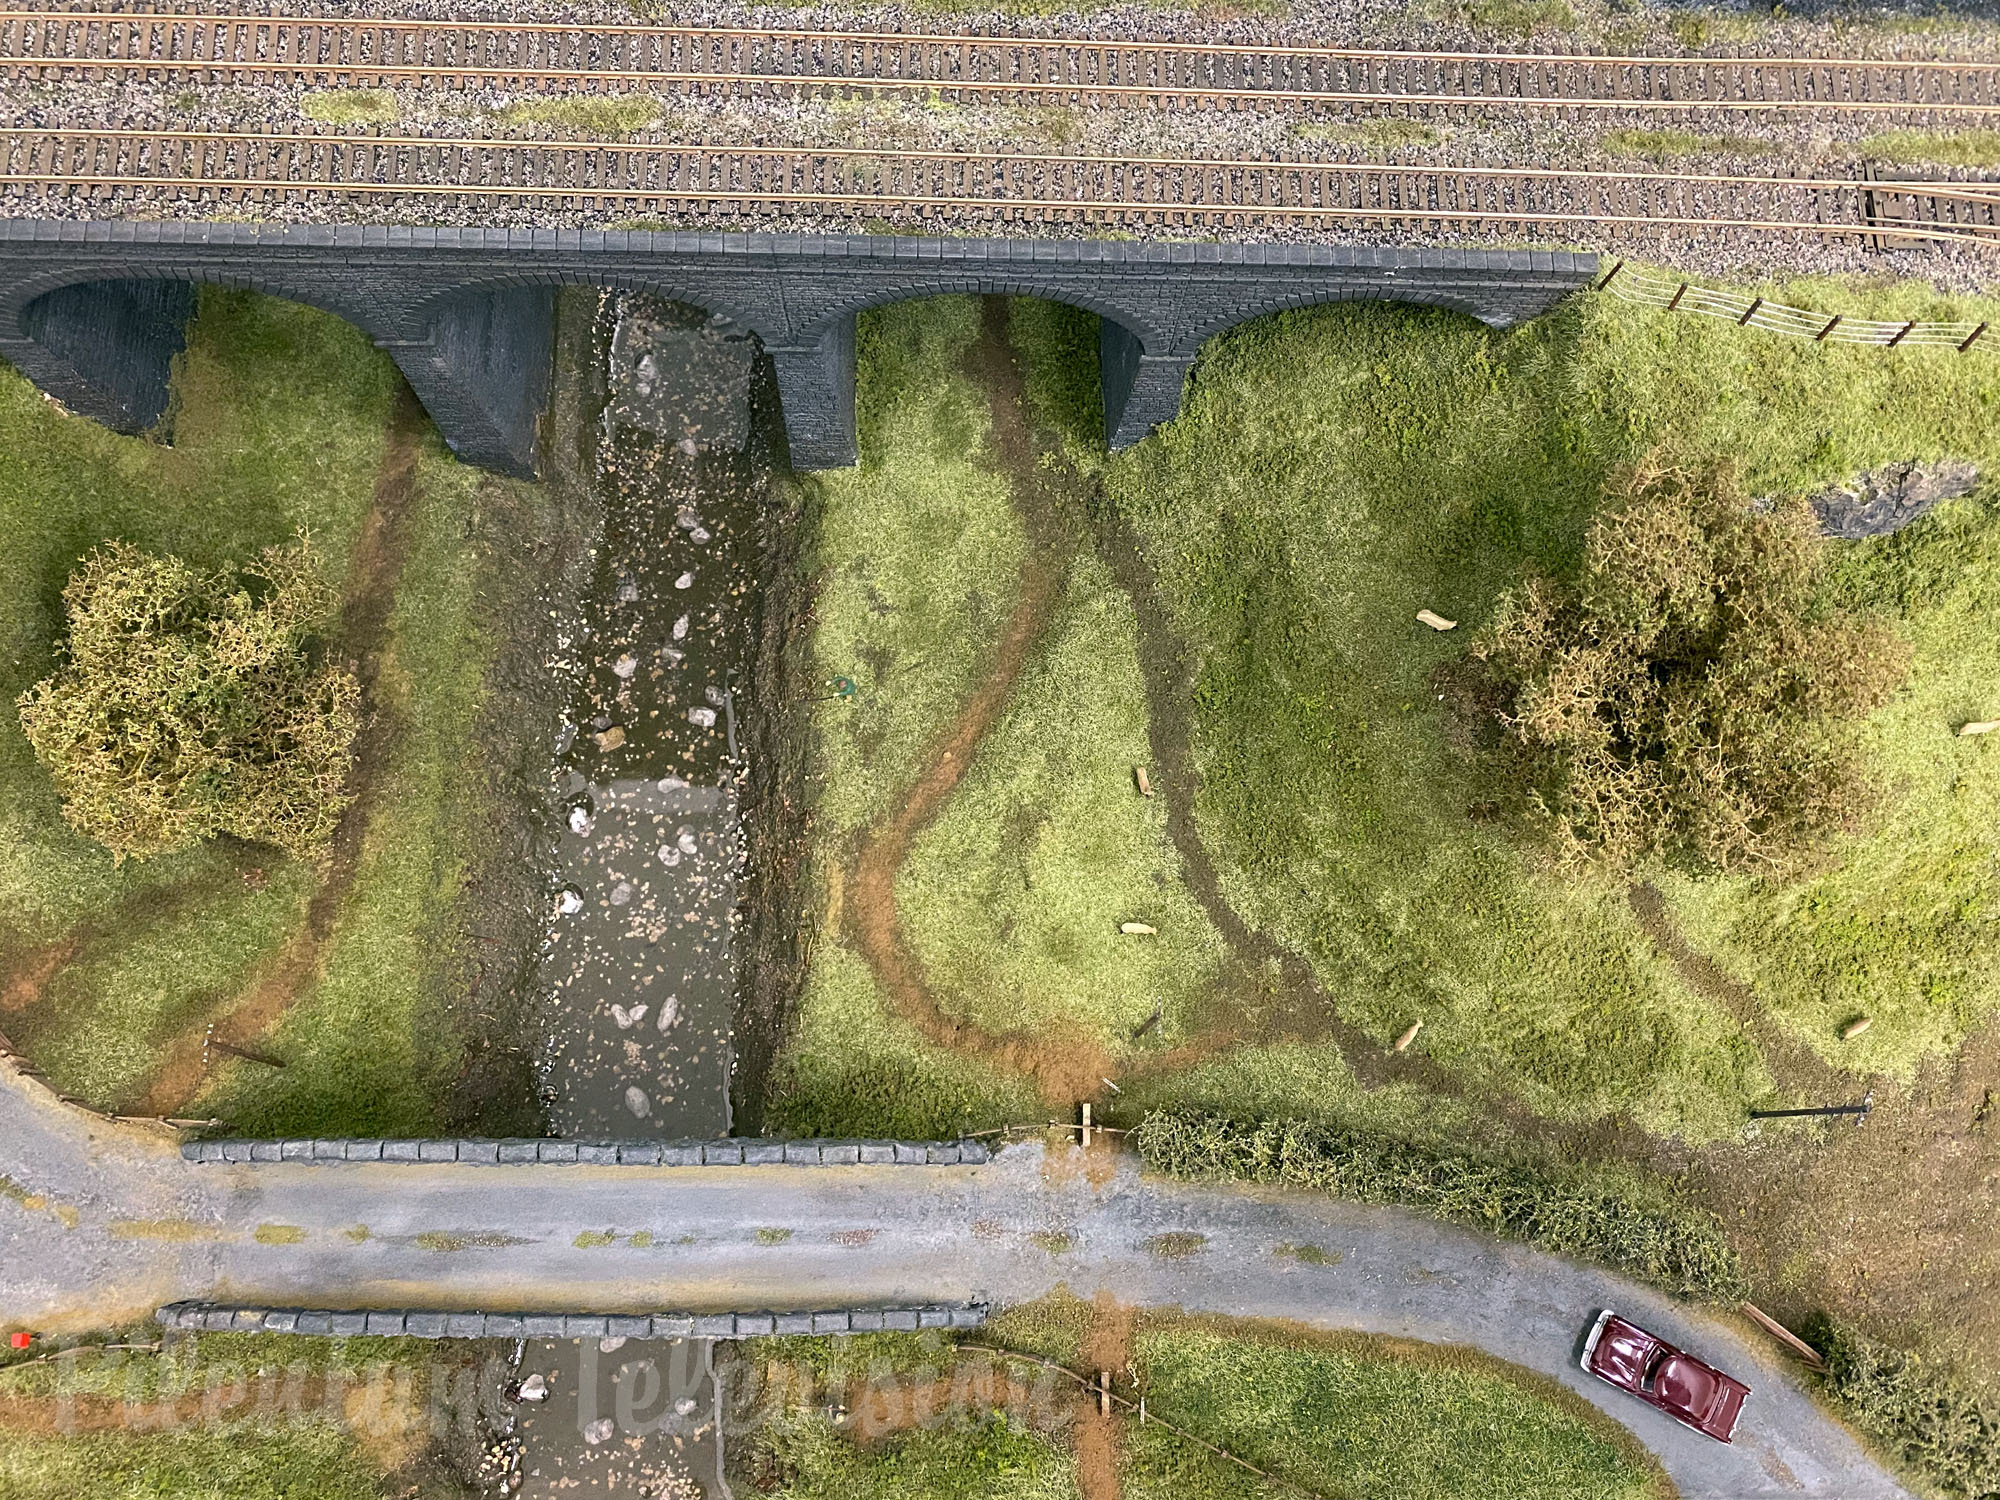 Great Landscape Modelling on British South Hams Model Railway Layout in OO Gauge